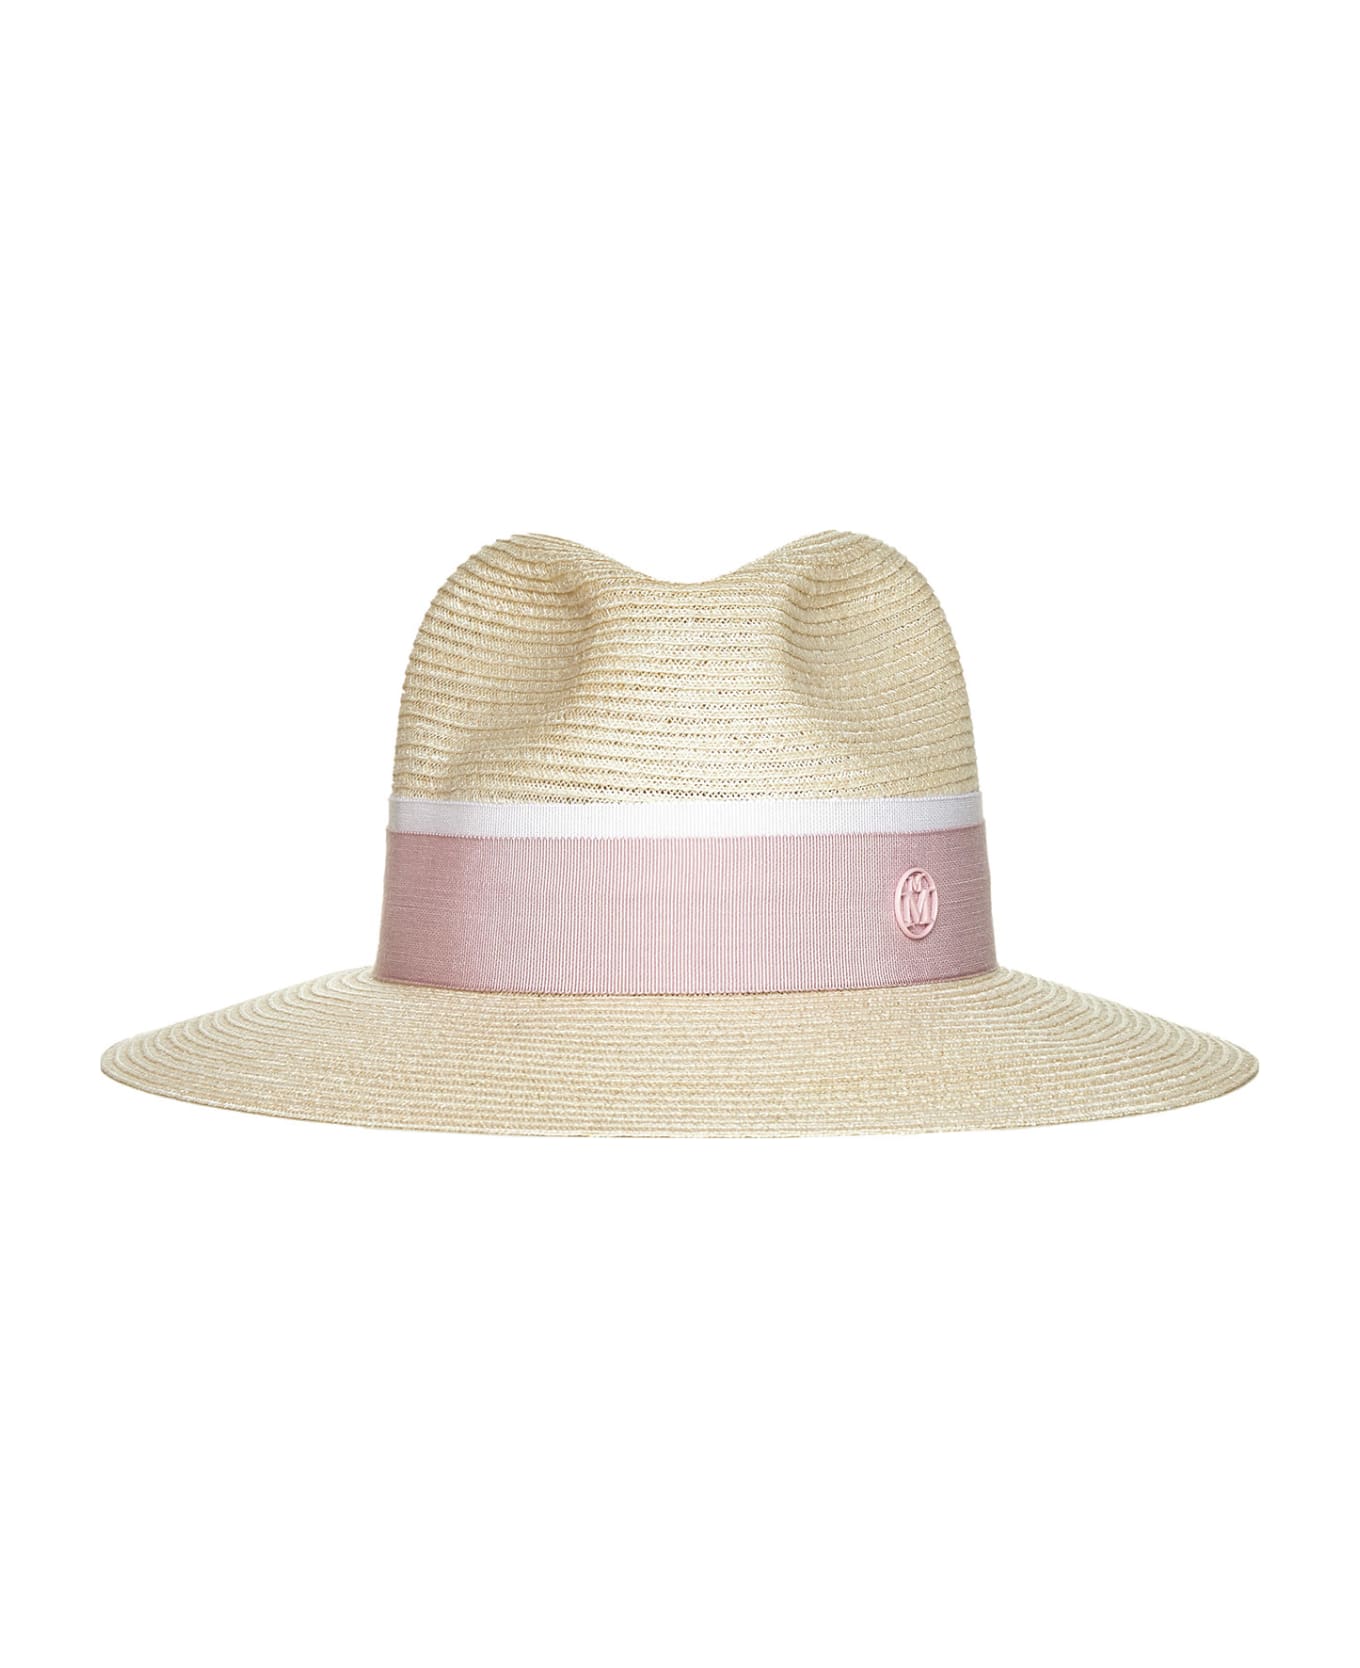 Maison Michel boka Hat - Natural pink